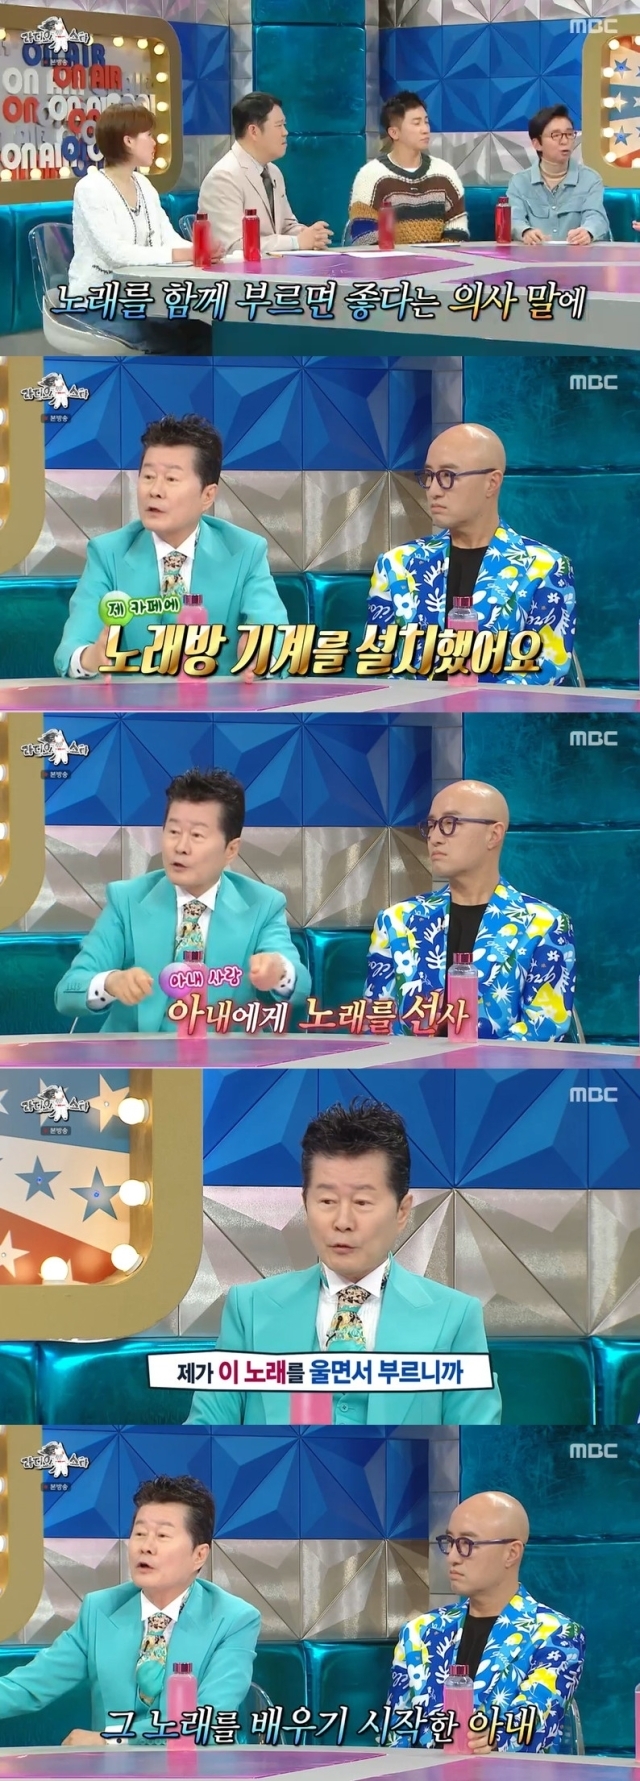 MBC '라디오스타' 방송 화면